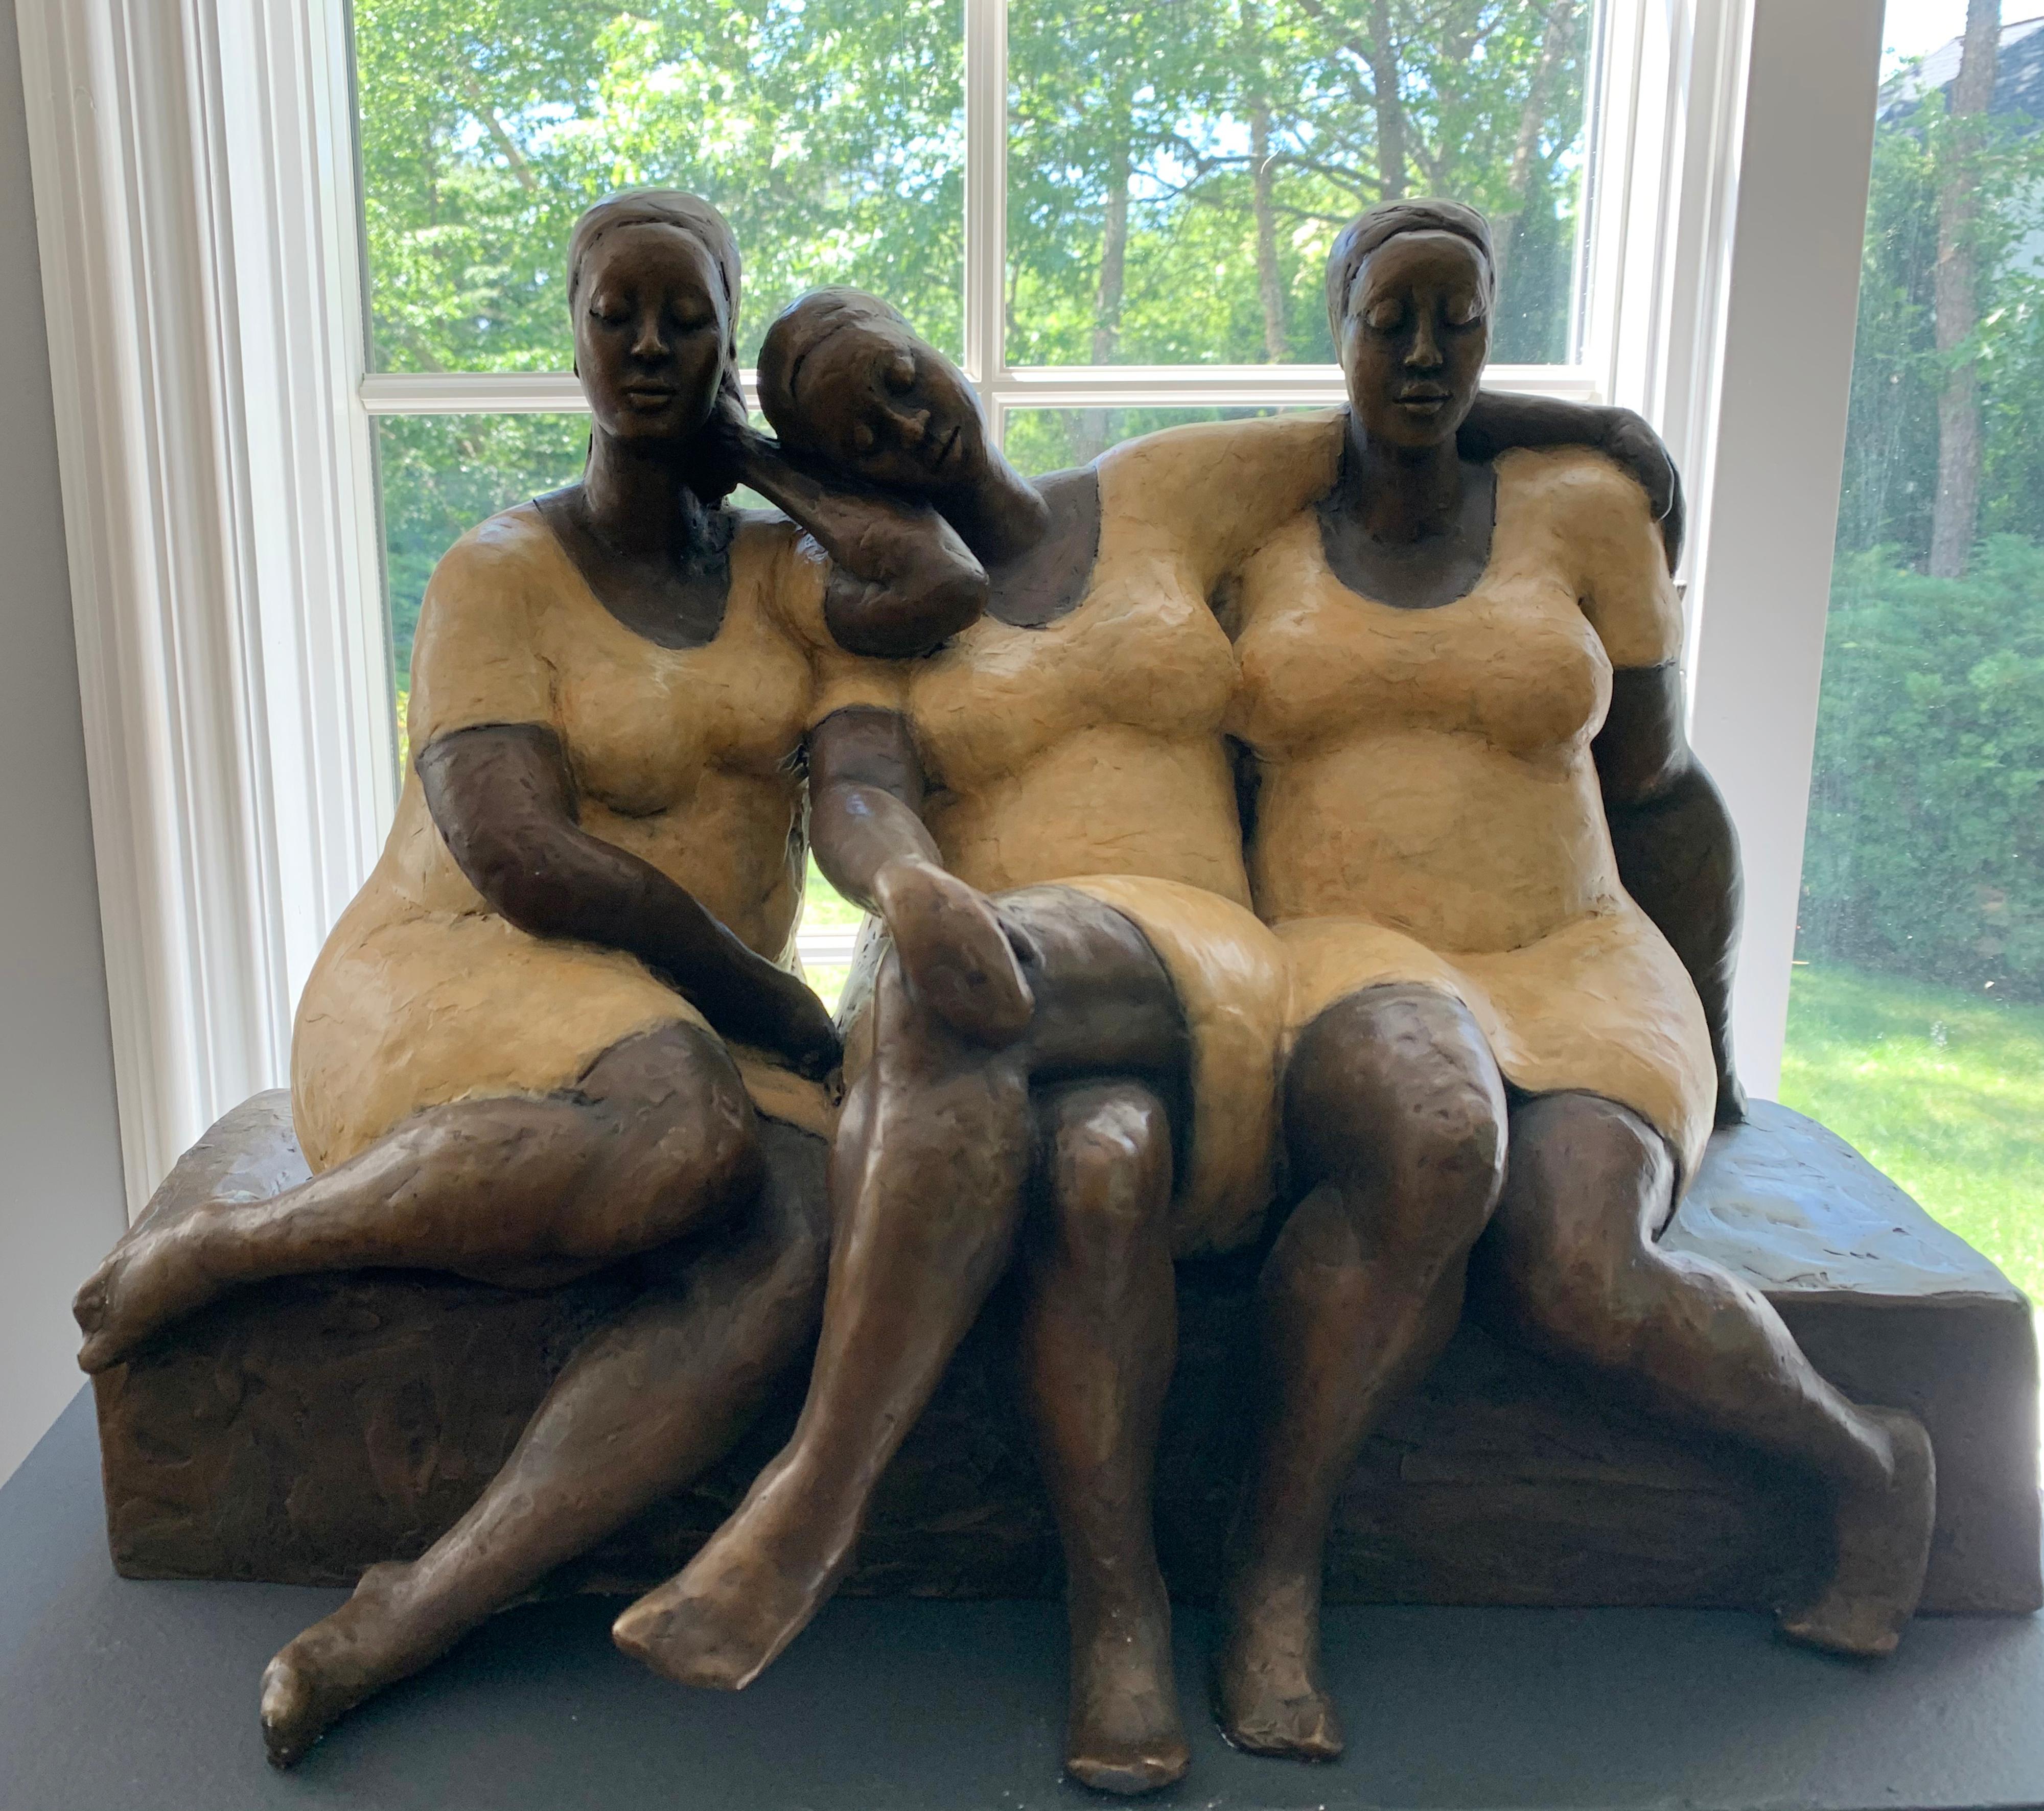 Nnamdi Okonkwo Figurative Sculpture - "Friends" Cast Bronze Sculpture with Patina and Lacquer Finish